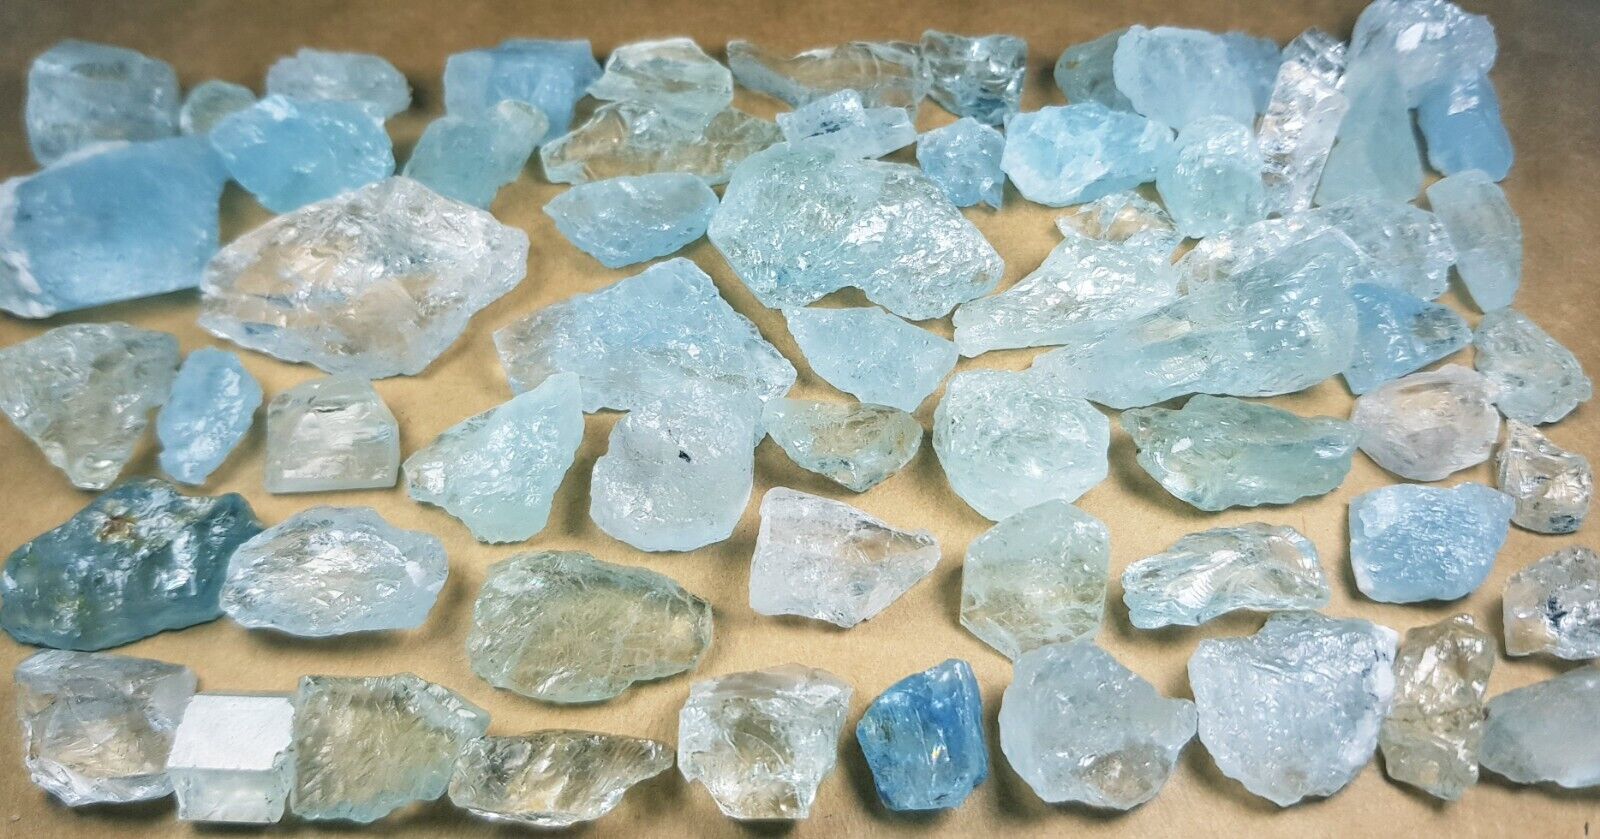 645 Ct Natural sky blue Color Aquamarine Transparent Crystal lot from Pakistan